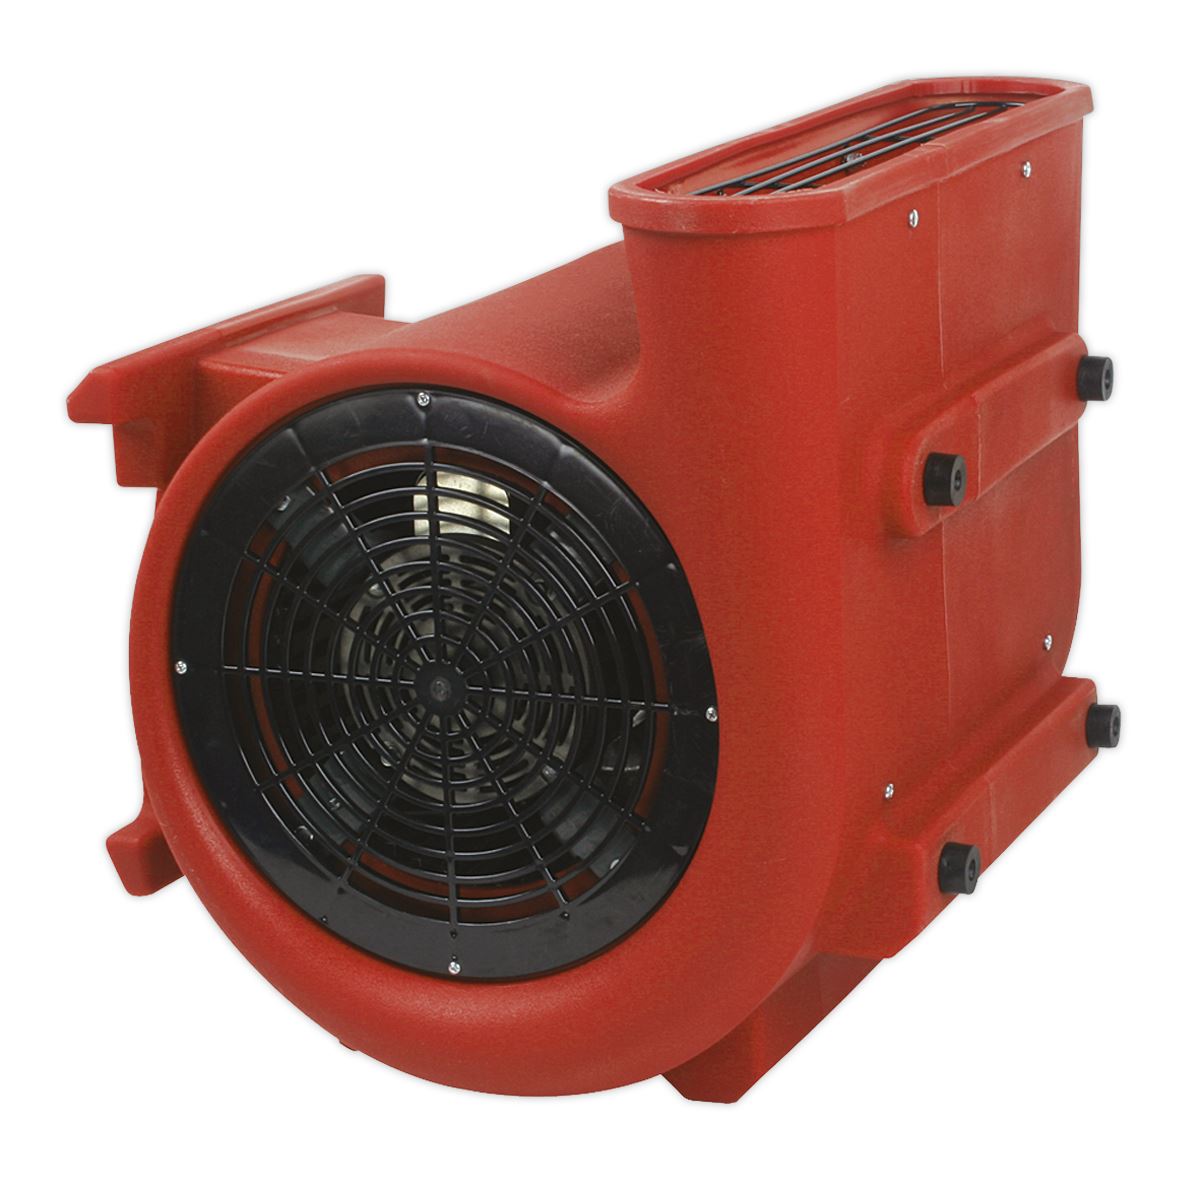 Sealey Air Dryer/Blower 2860cfm 230V